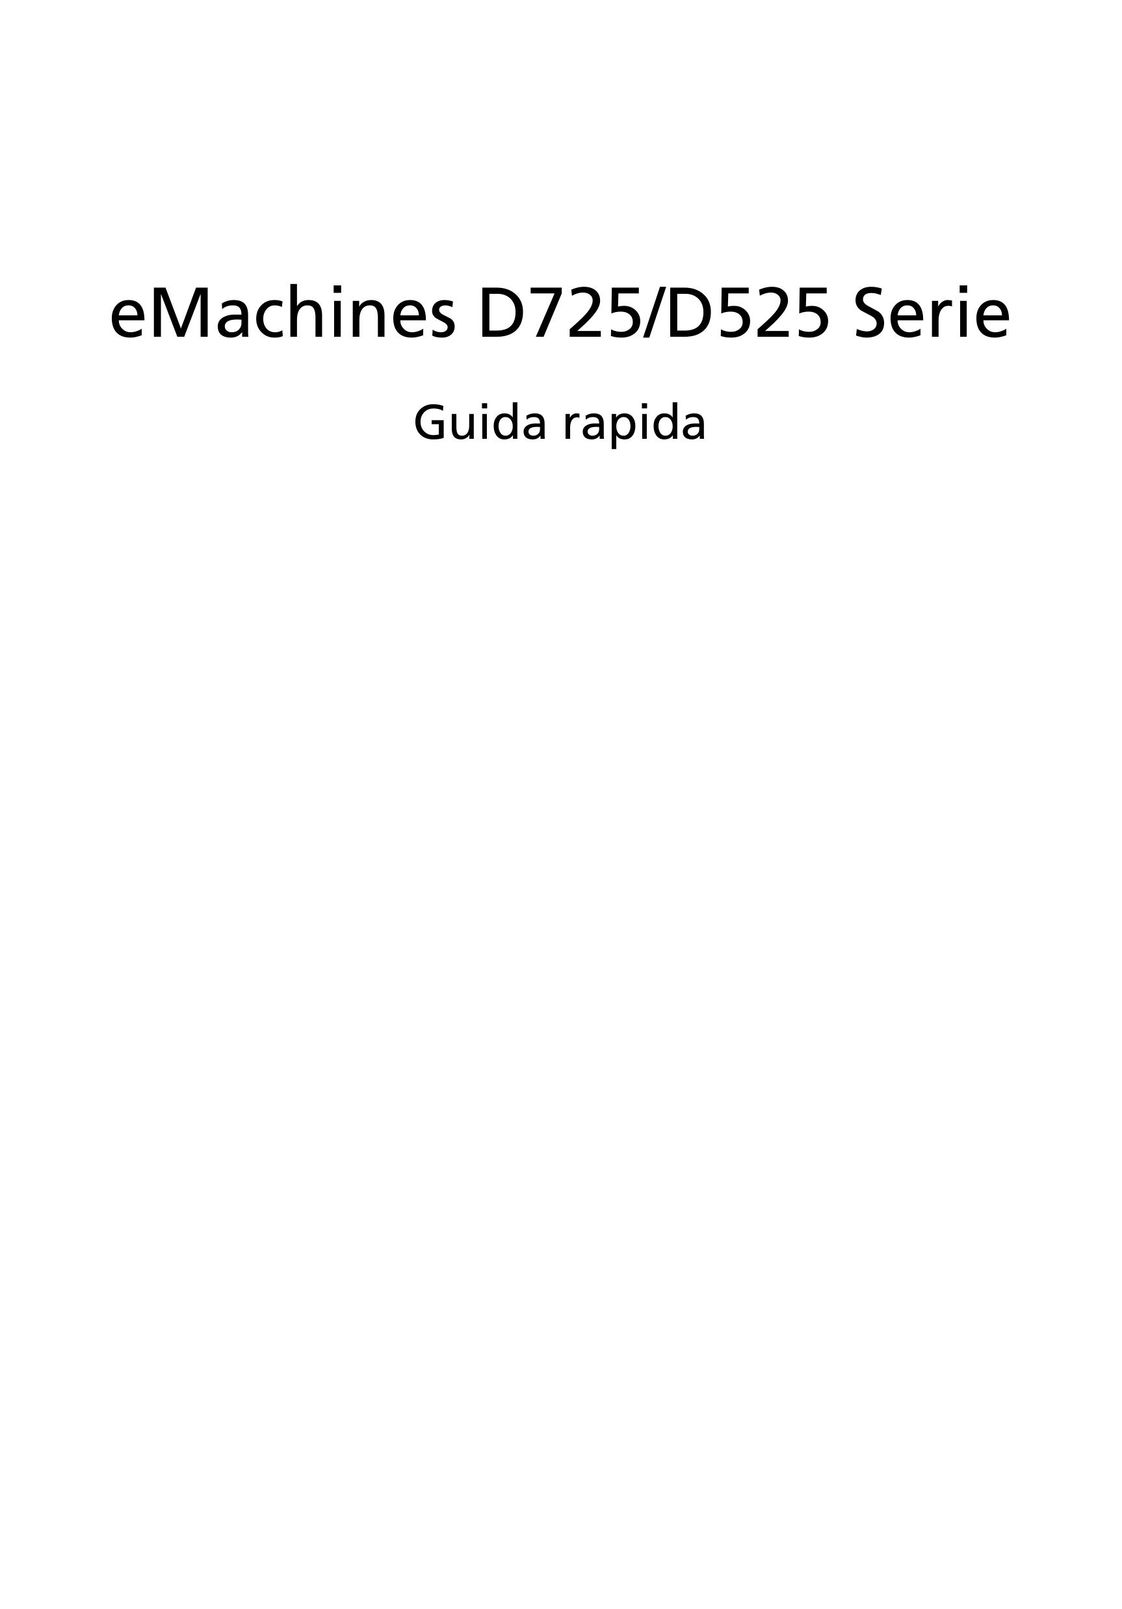 eMachines e machine Laptop User Manual